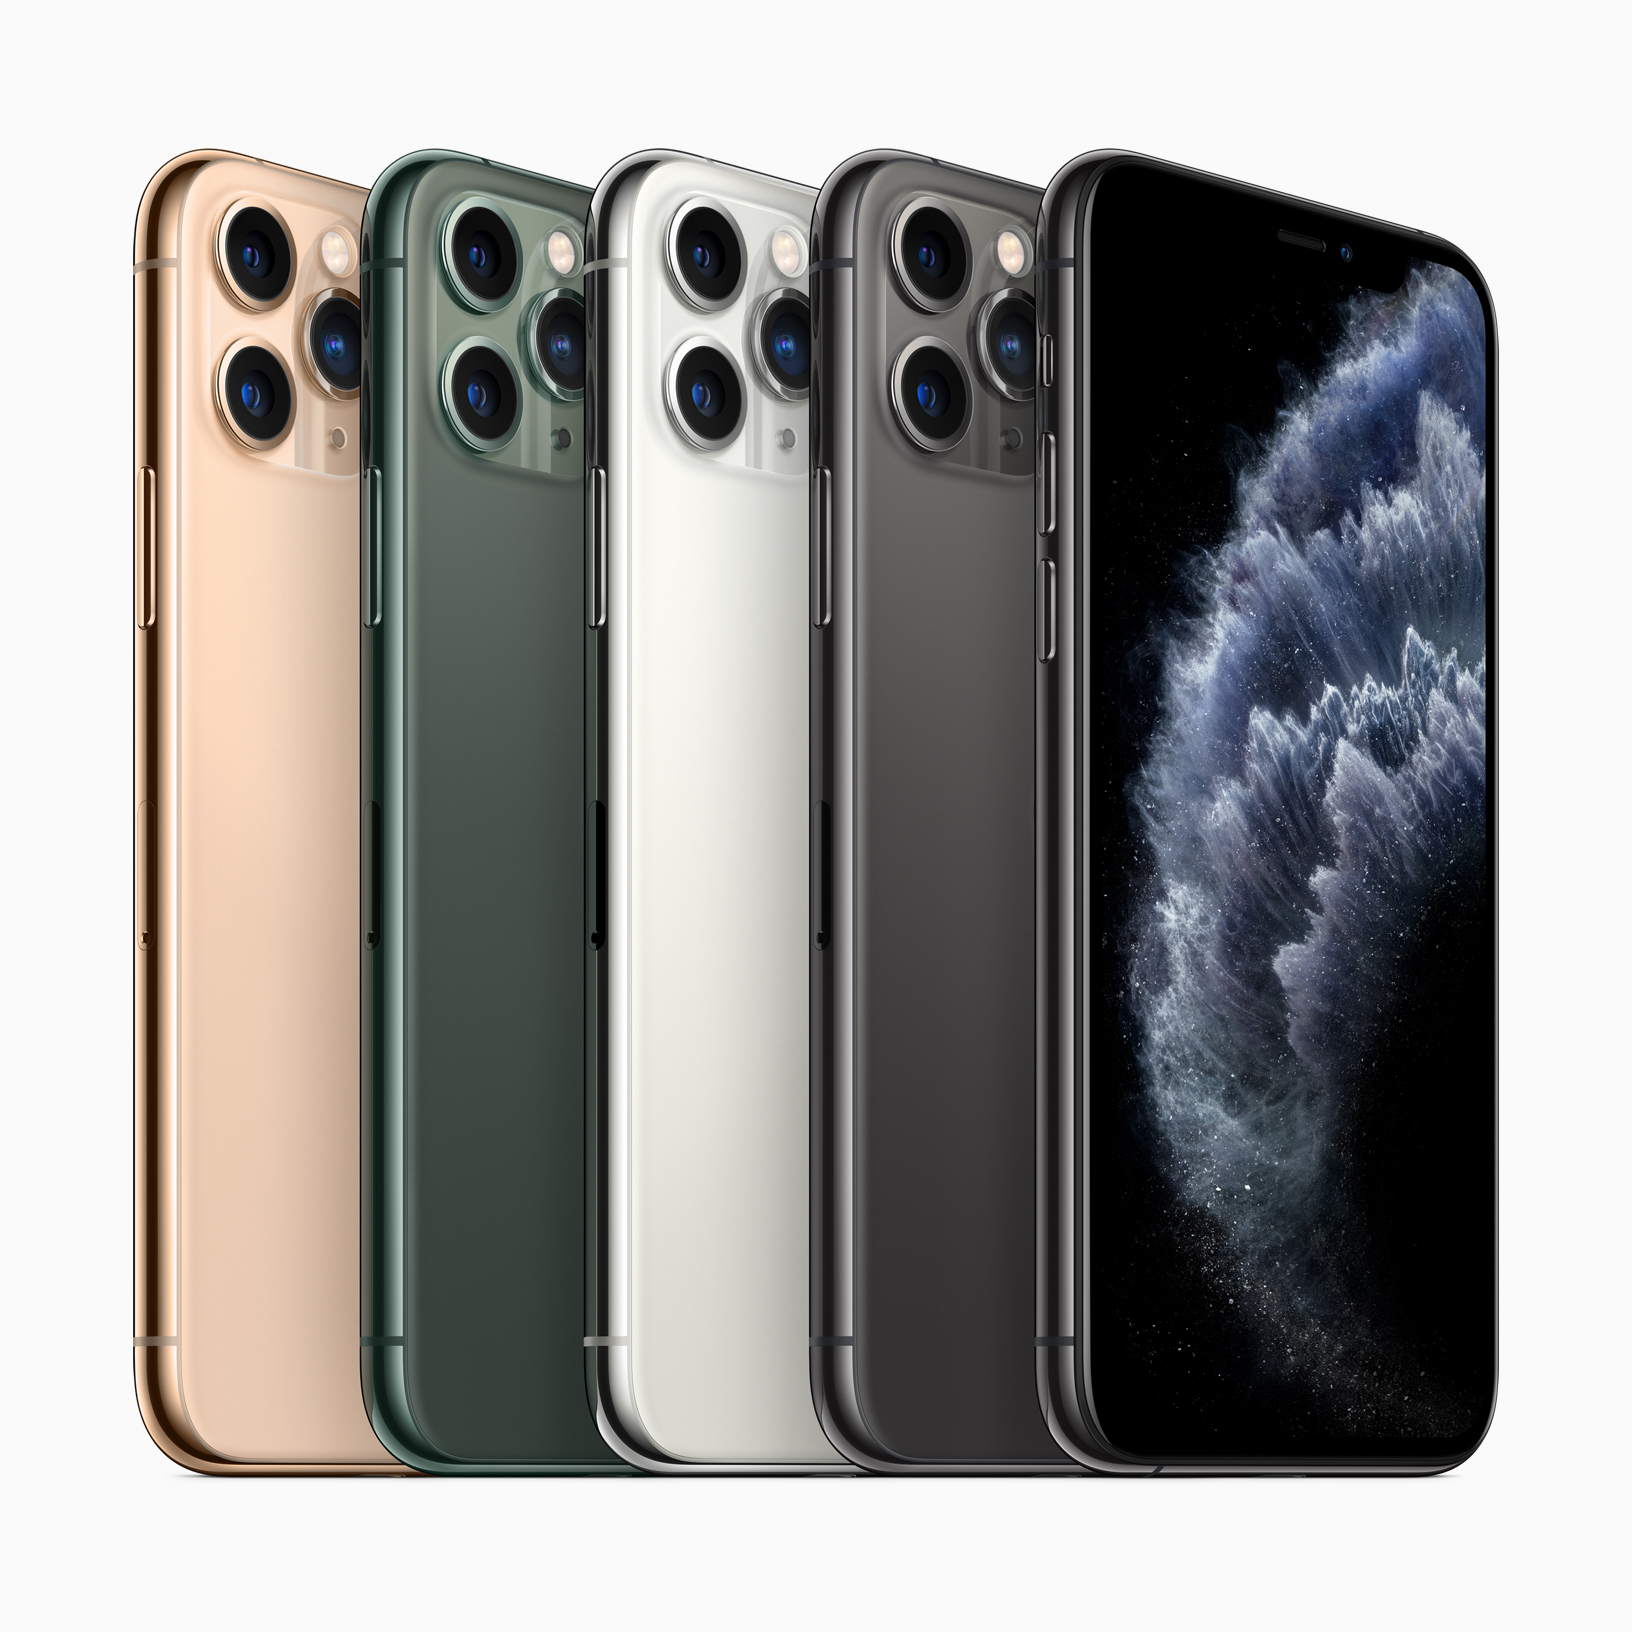 Apple iPhone 11 Pro Colors 091019 - Os 10 melhores celulares de 2019